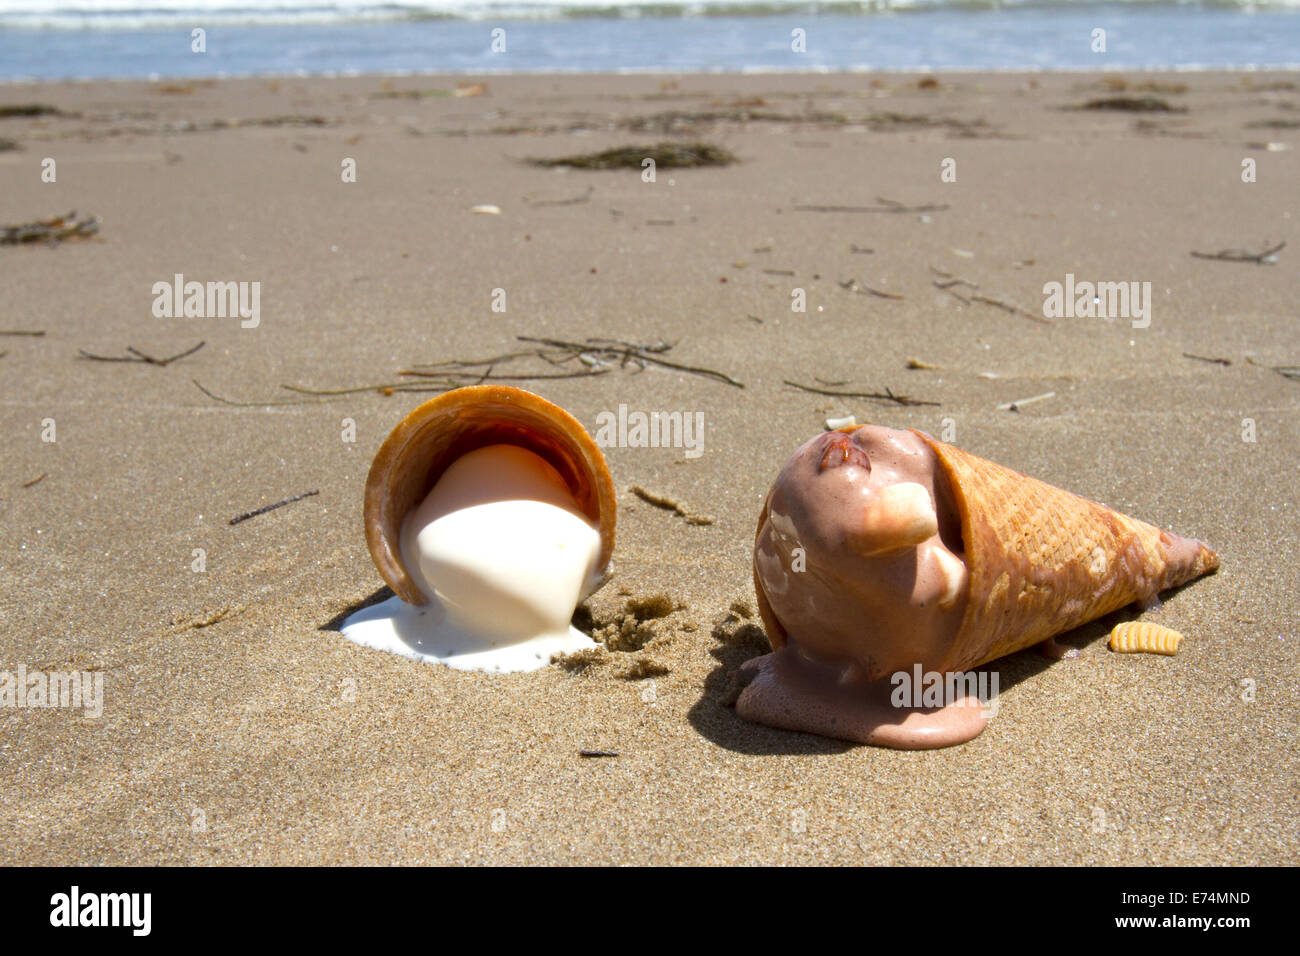 Chocolate and vanilla ice cream cones melting on deserted beach Stock Photo